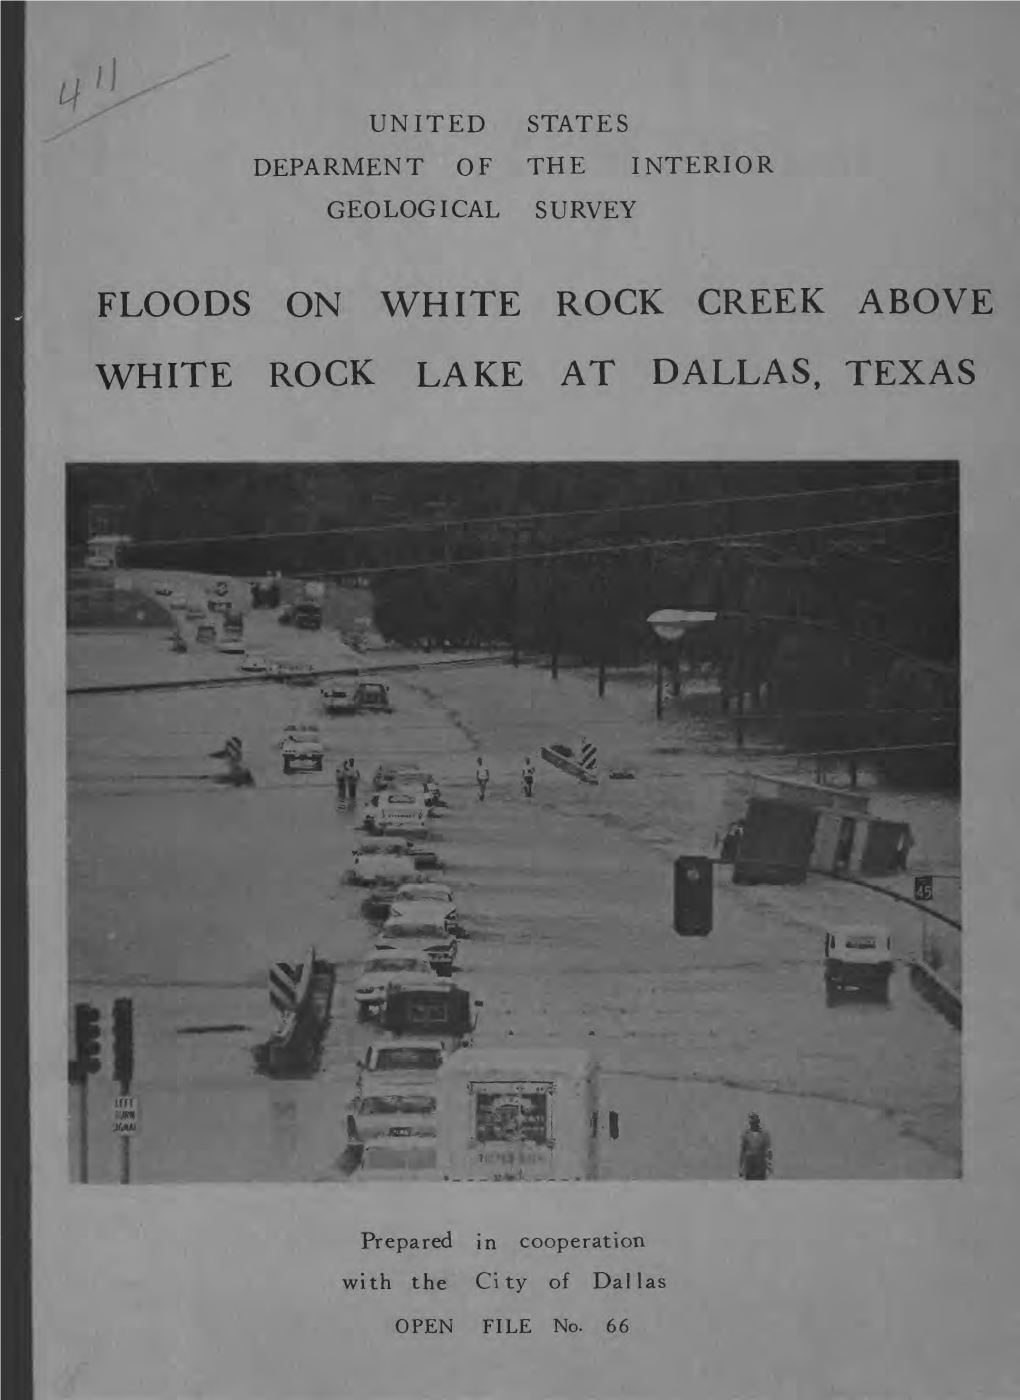 Floods on White Rock Creek Above White Rock Lake at Dallas, Texas